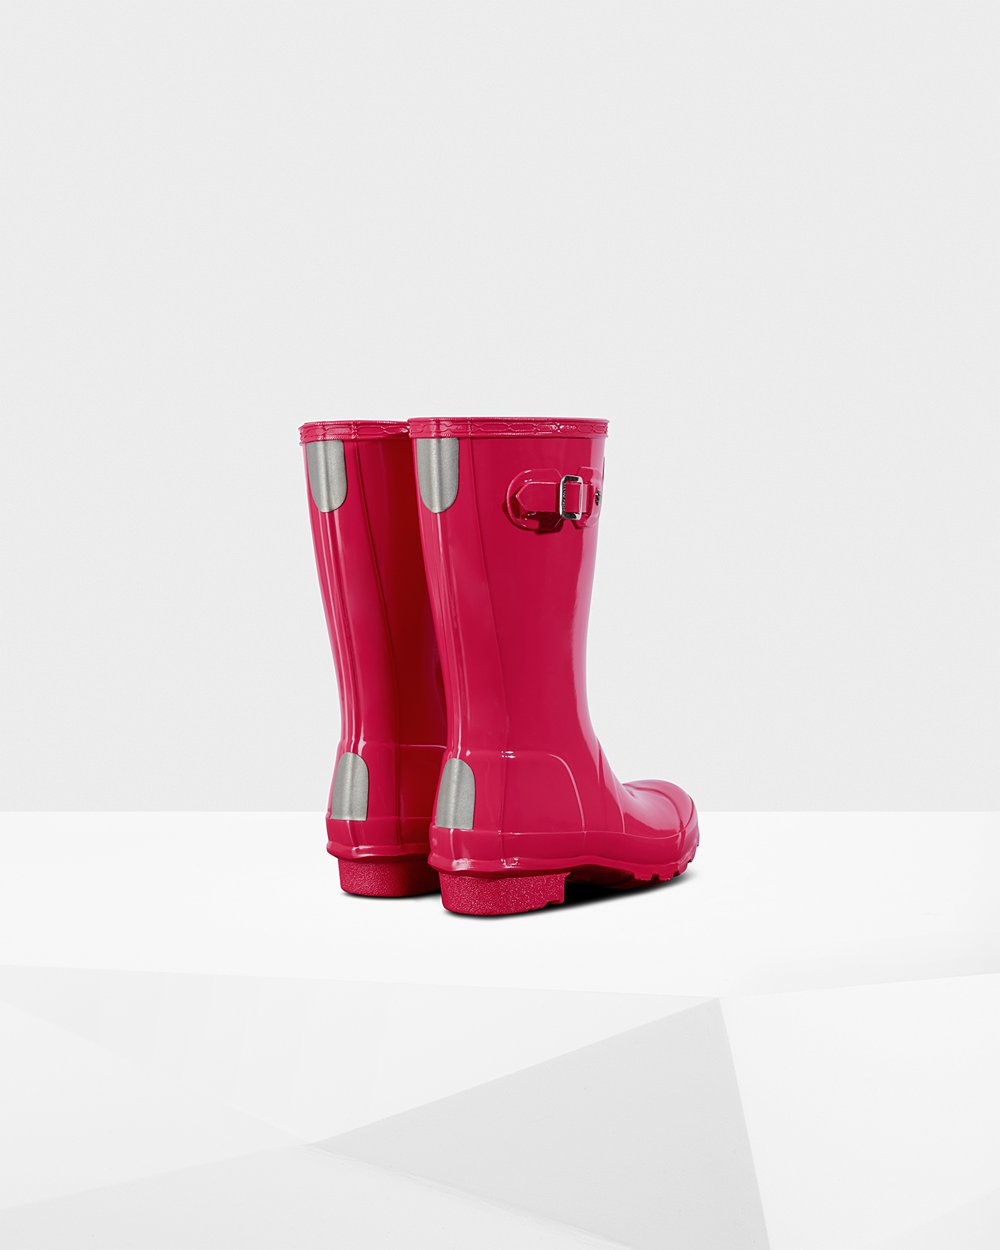 Kids Rain Boots - Hunter Original Big Gloss (12AGLCNHF) - Pink